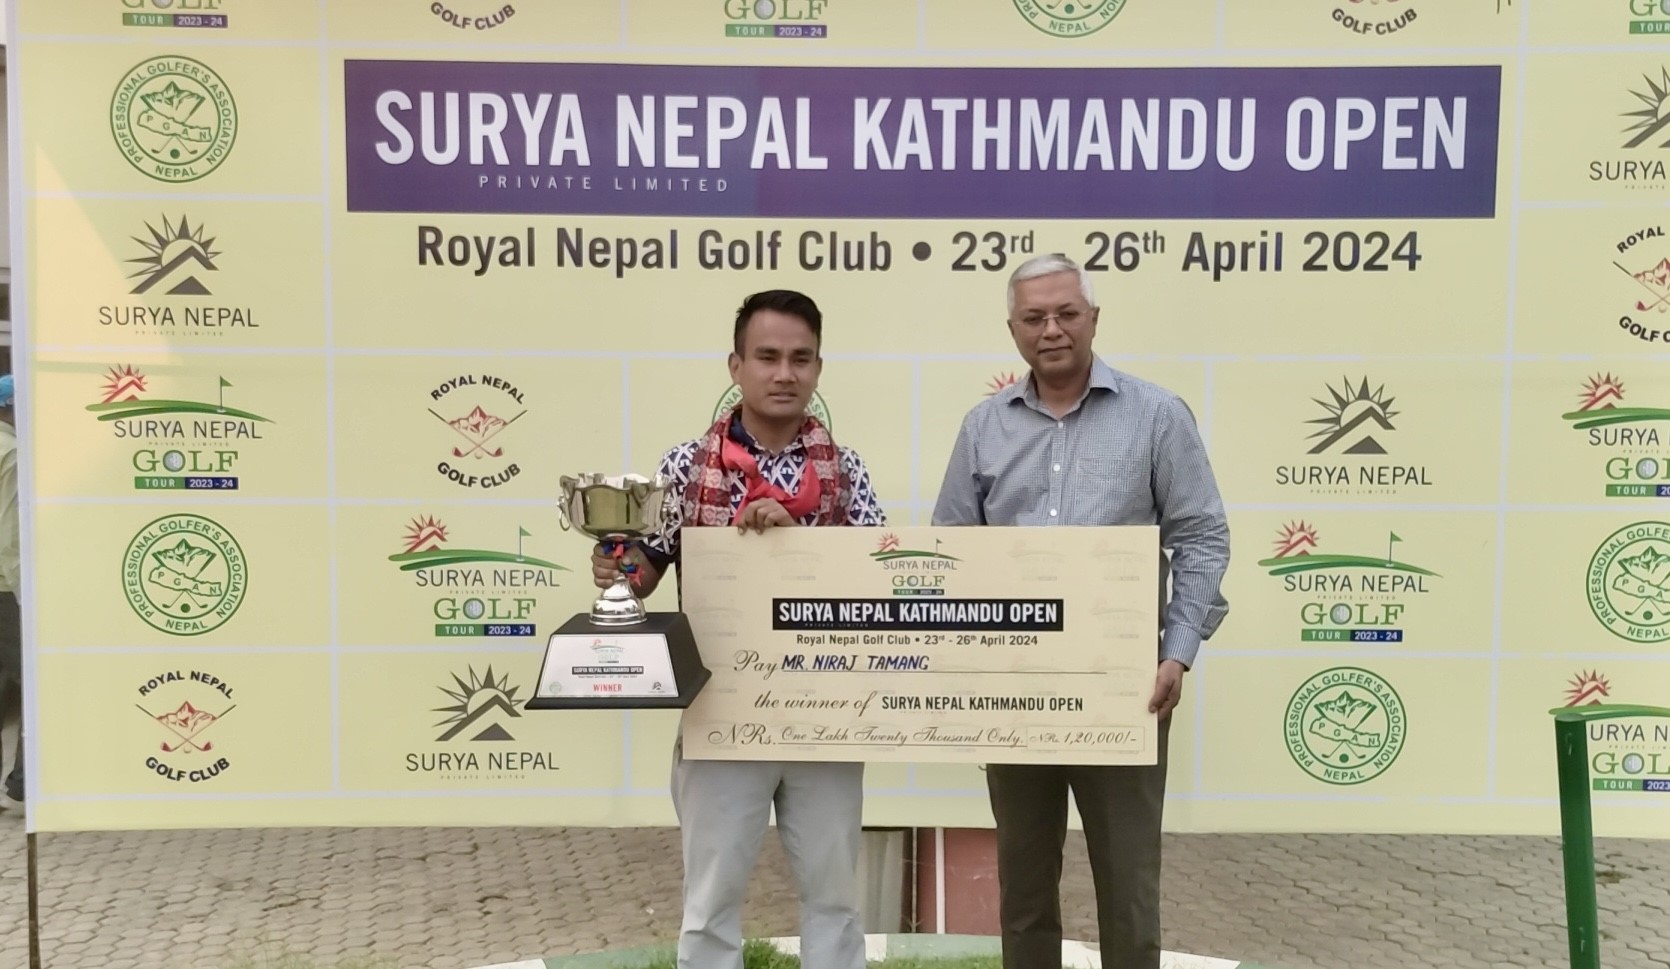 Surya Nepal Kathmandu Open concludes, Niraj Tamang wins maiden career title